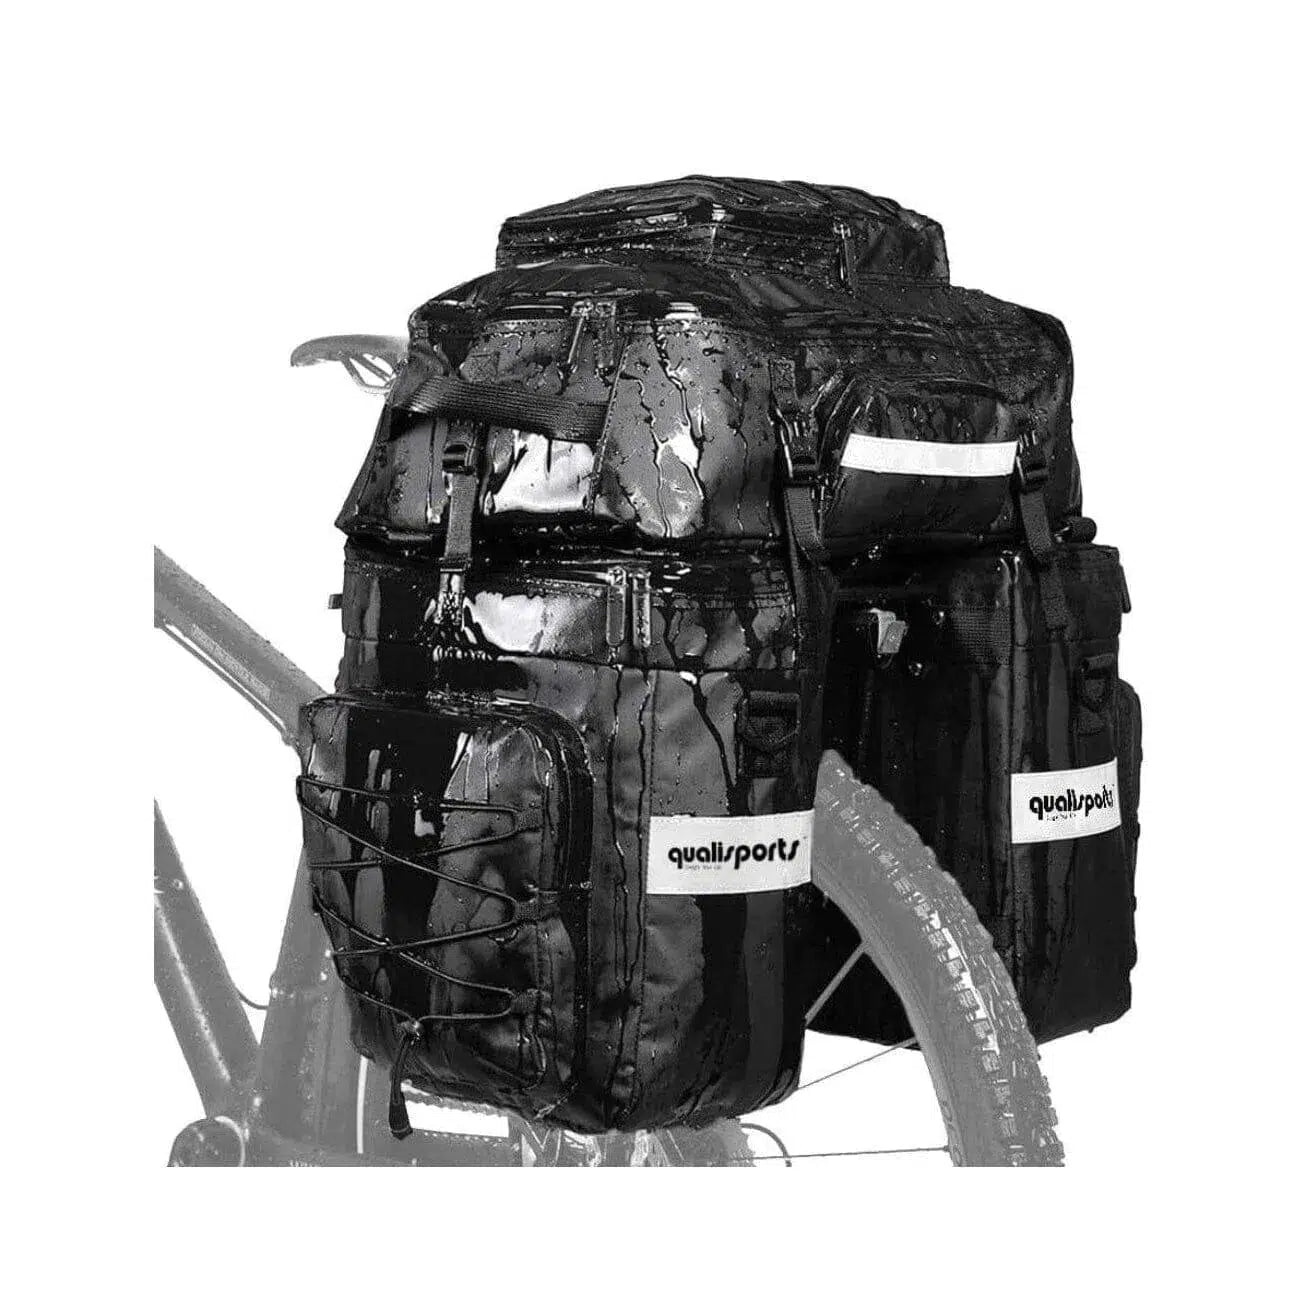 Qualisports Pannier Bag 75L Set 3 in 1|Qualisports - eBike Haul